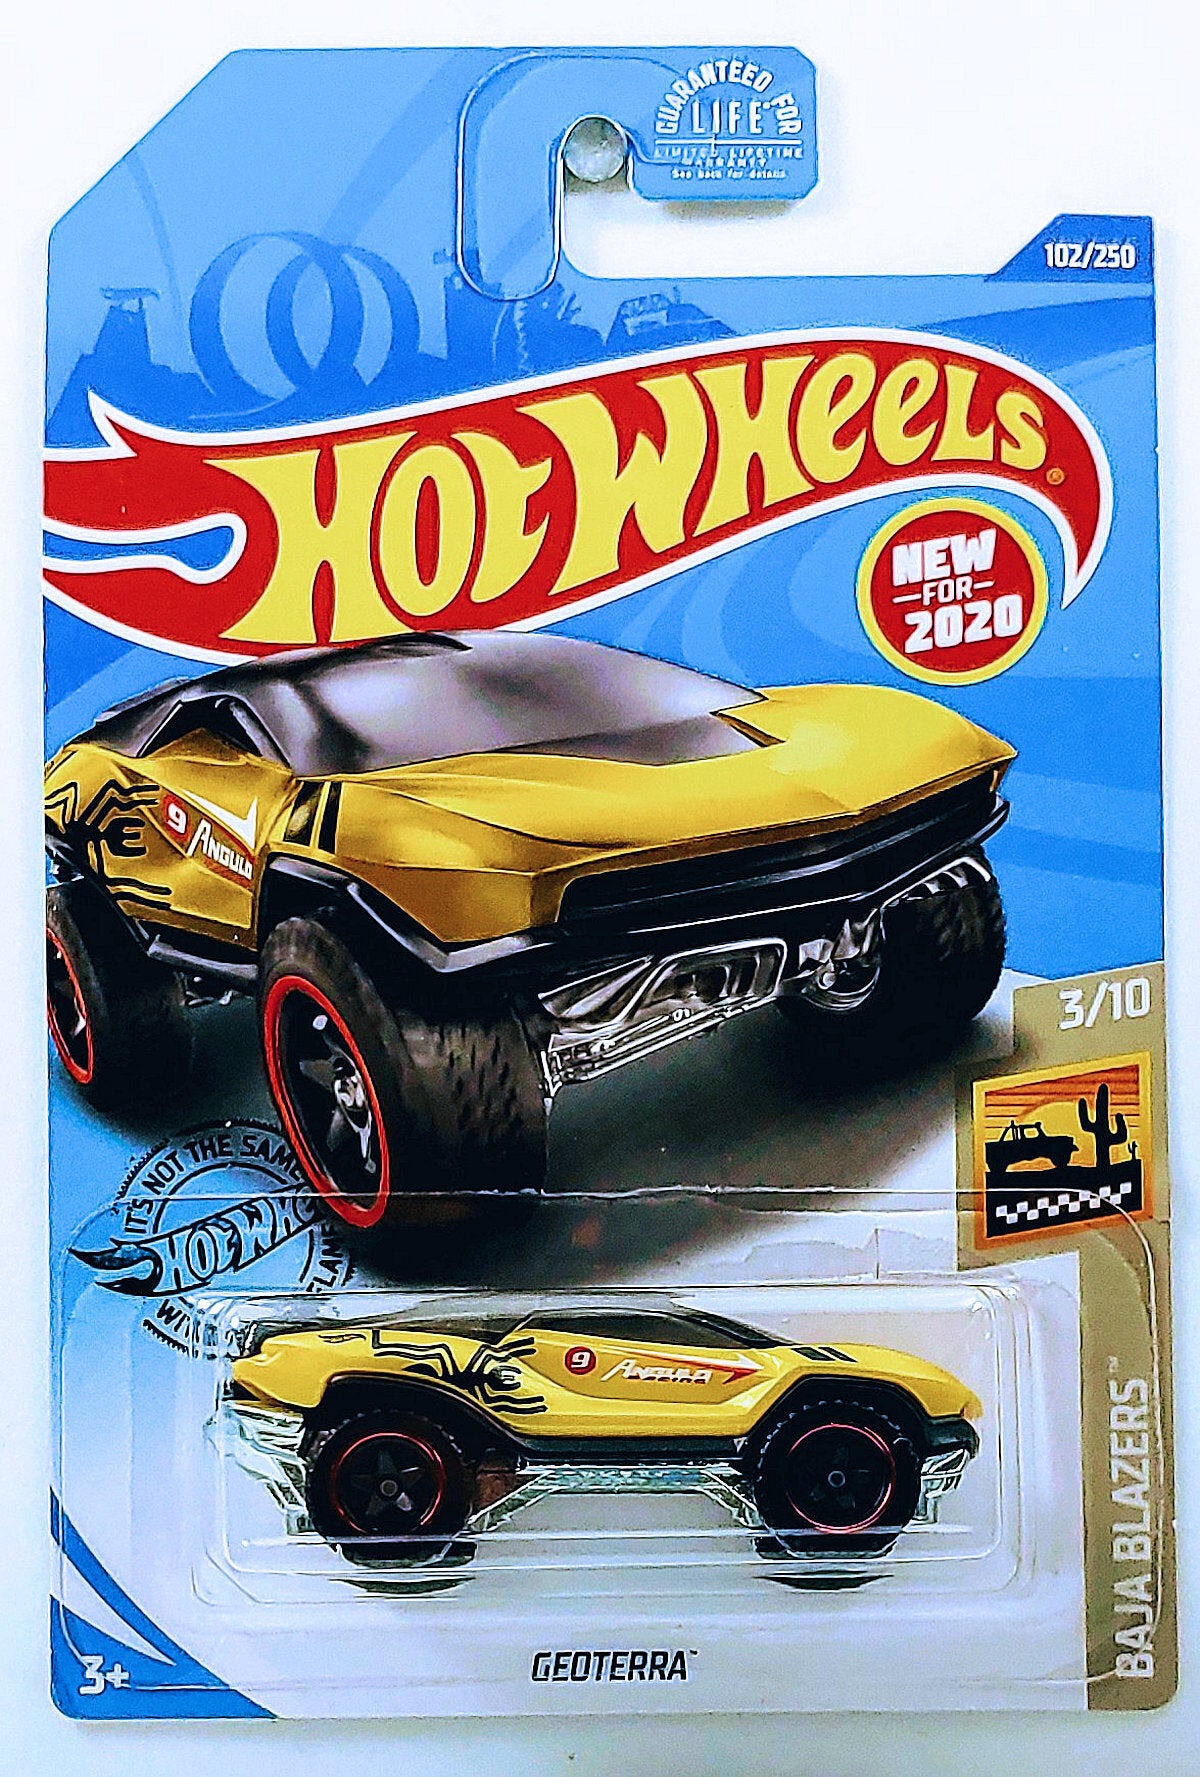 Hot Wheels 2020 - Collector # 102/250 - Baja Blazers 3/10 - New Models - Geoterra - Yellow